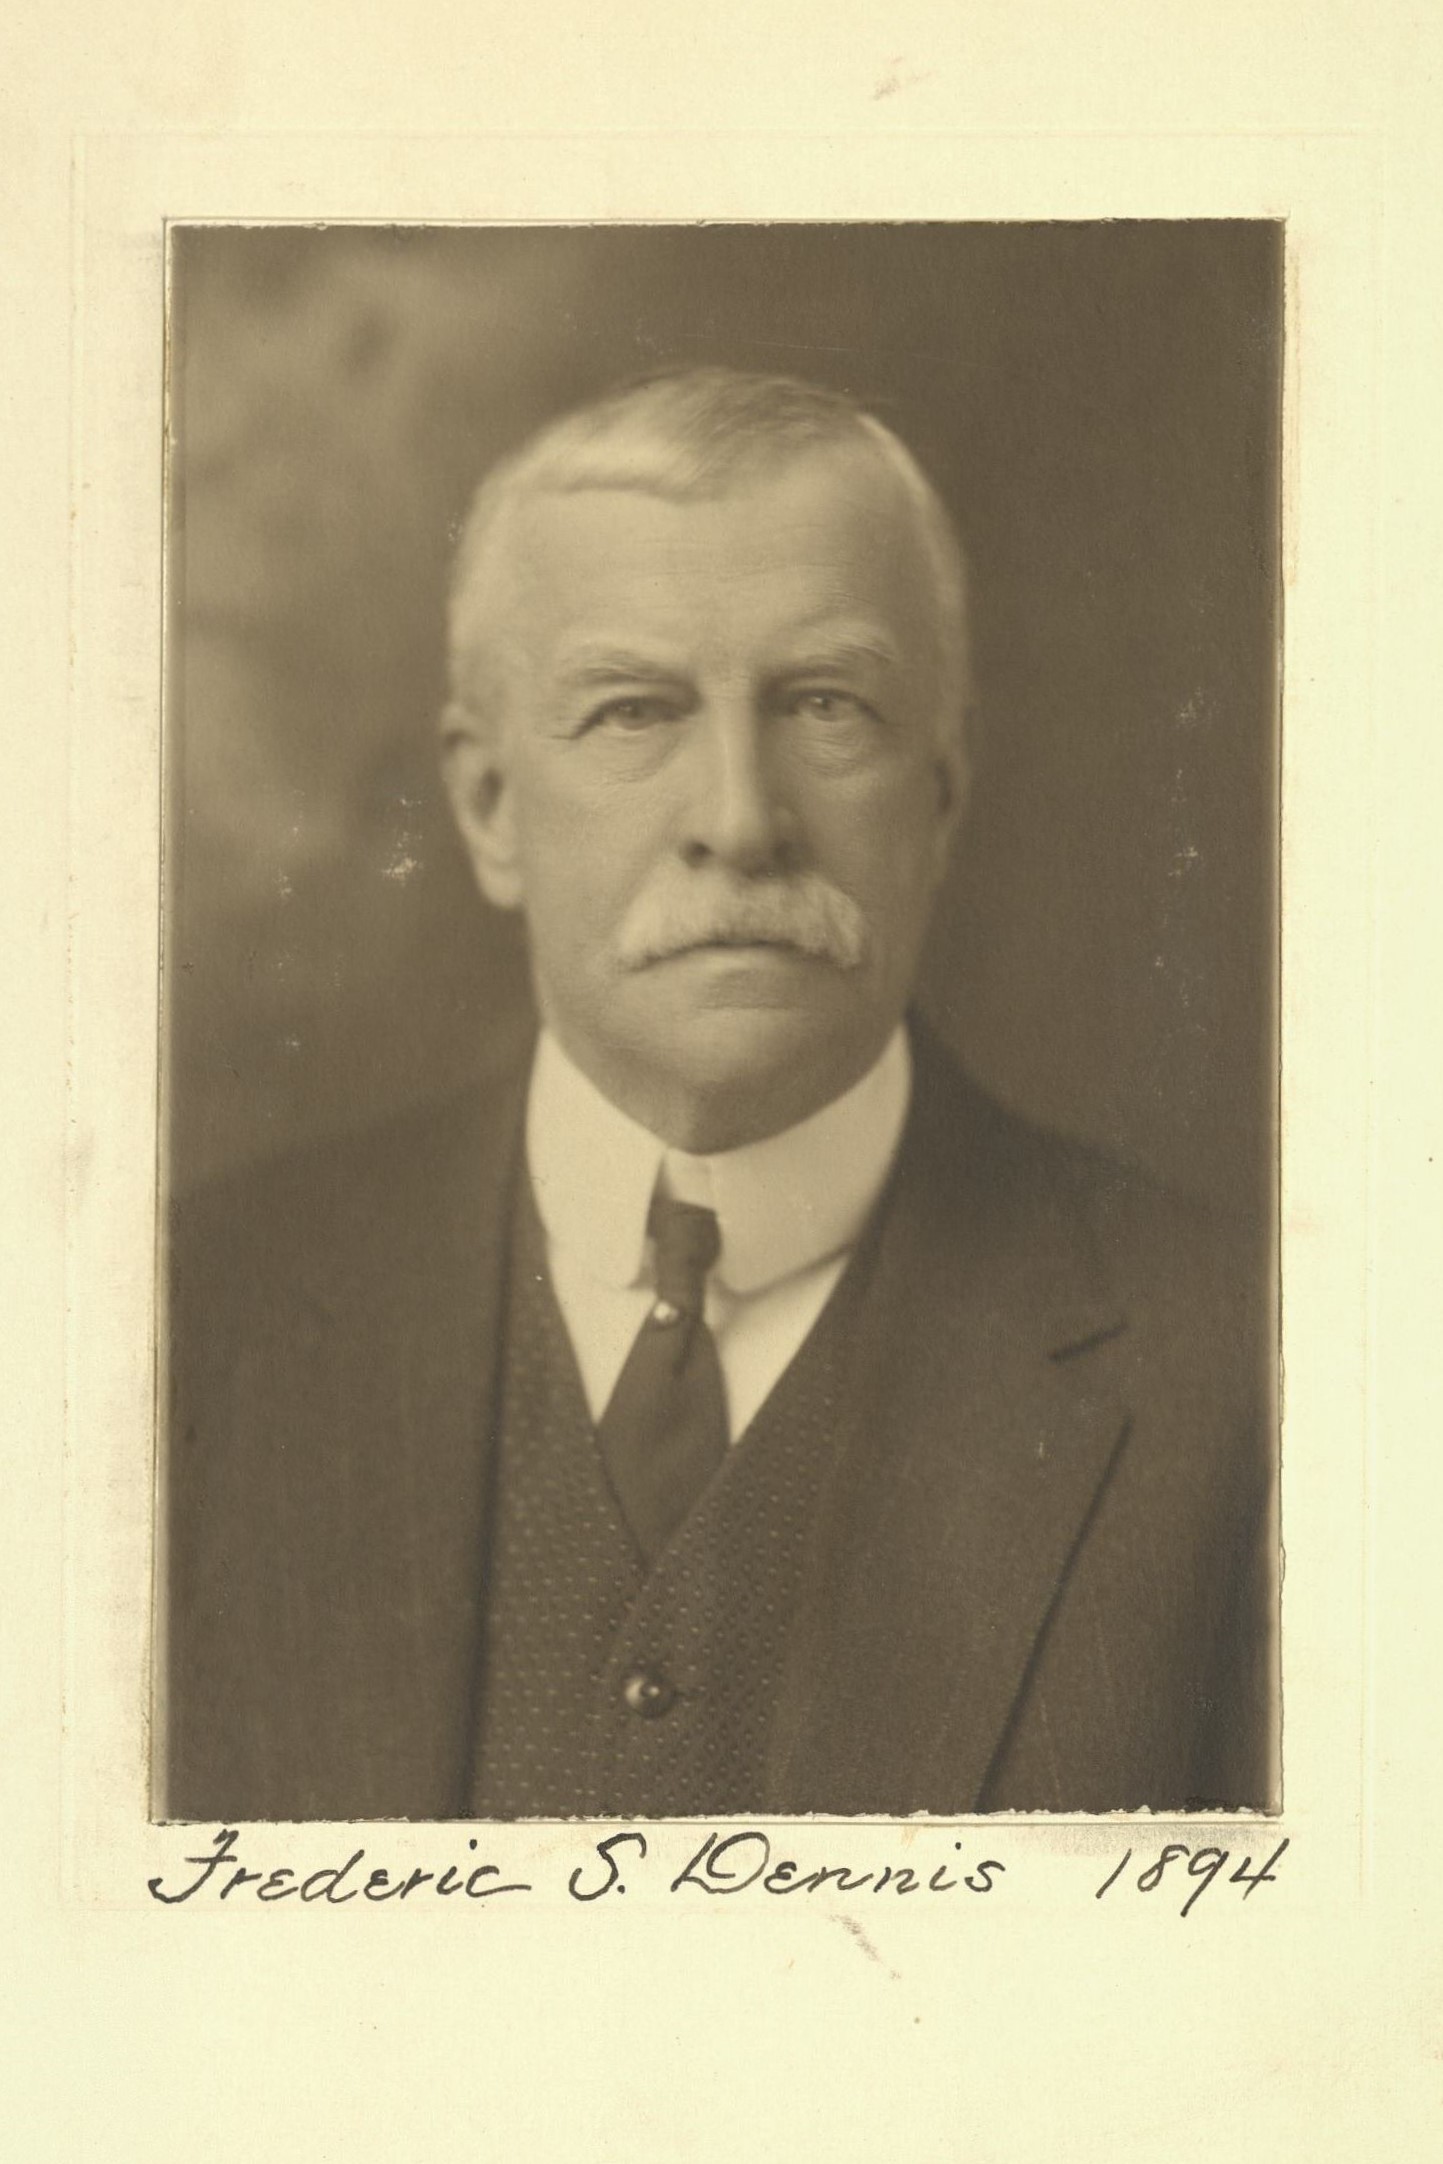 Member portrait of Frederic S. Dennis